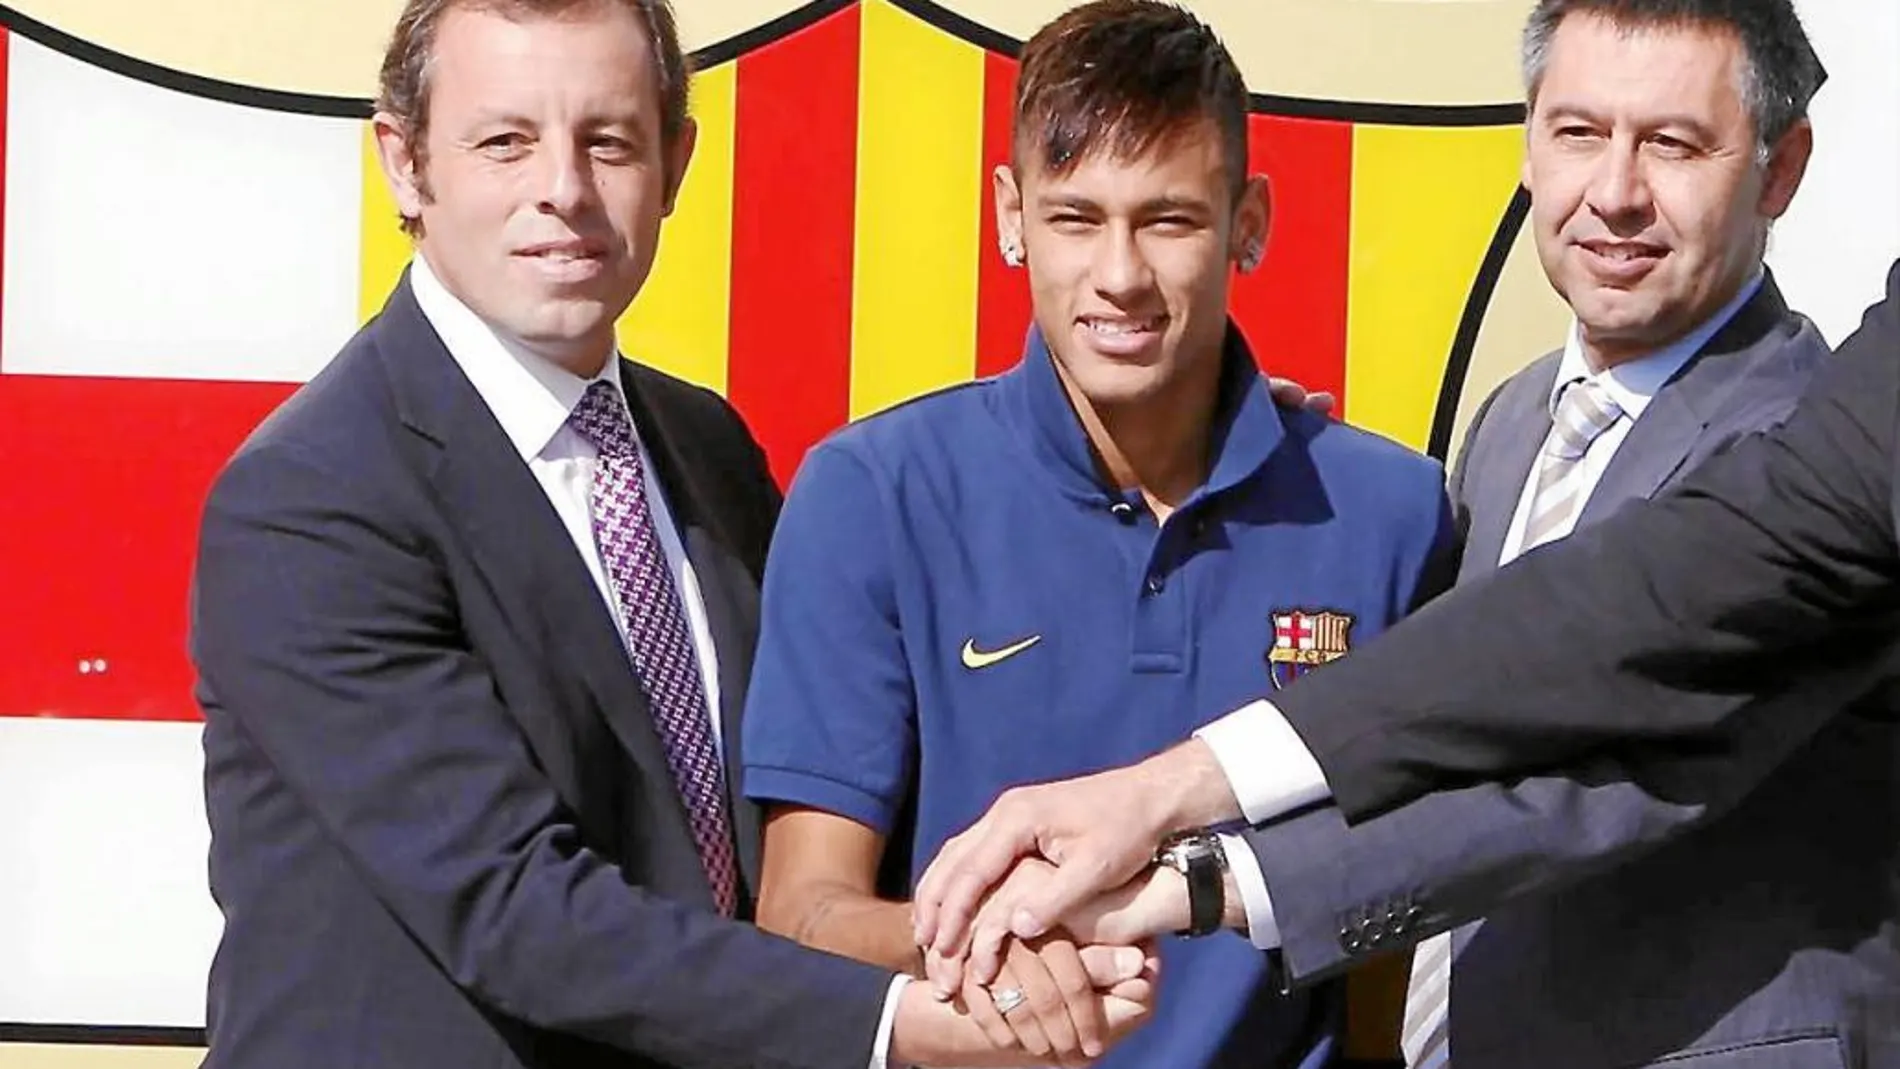 El fichaje de Neymar acerca al banquillo a Rosell y Bartomeu